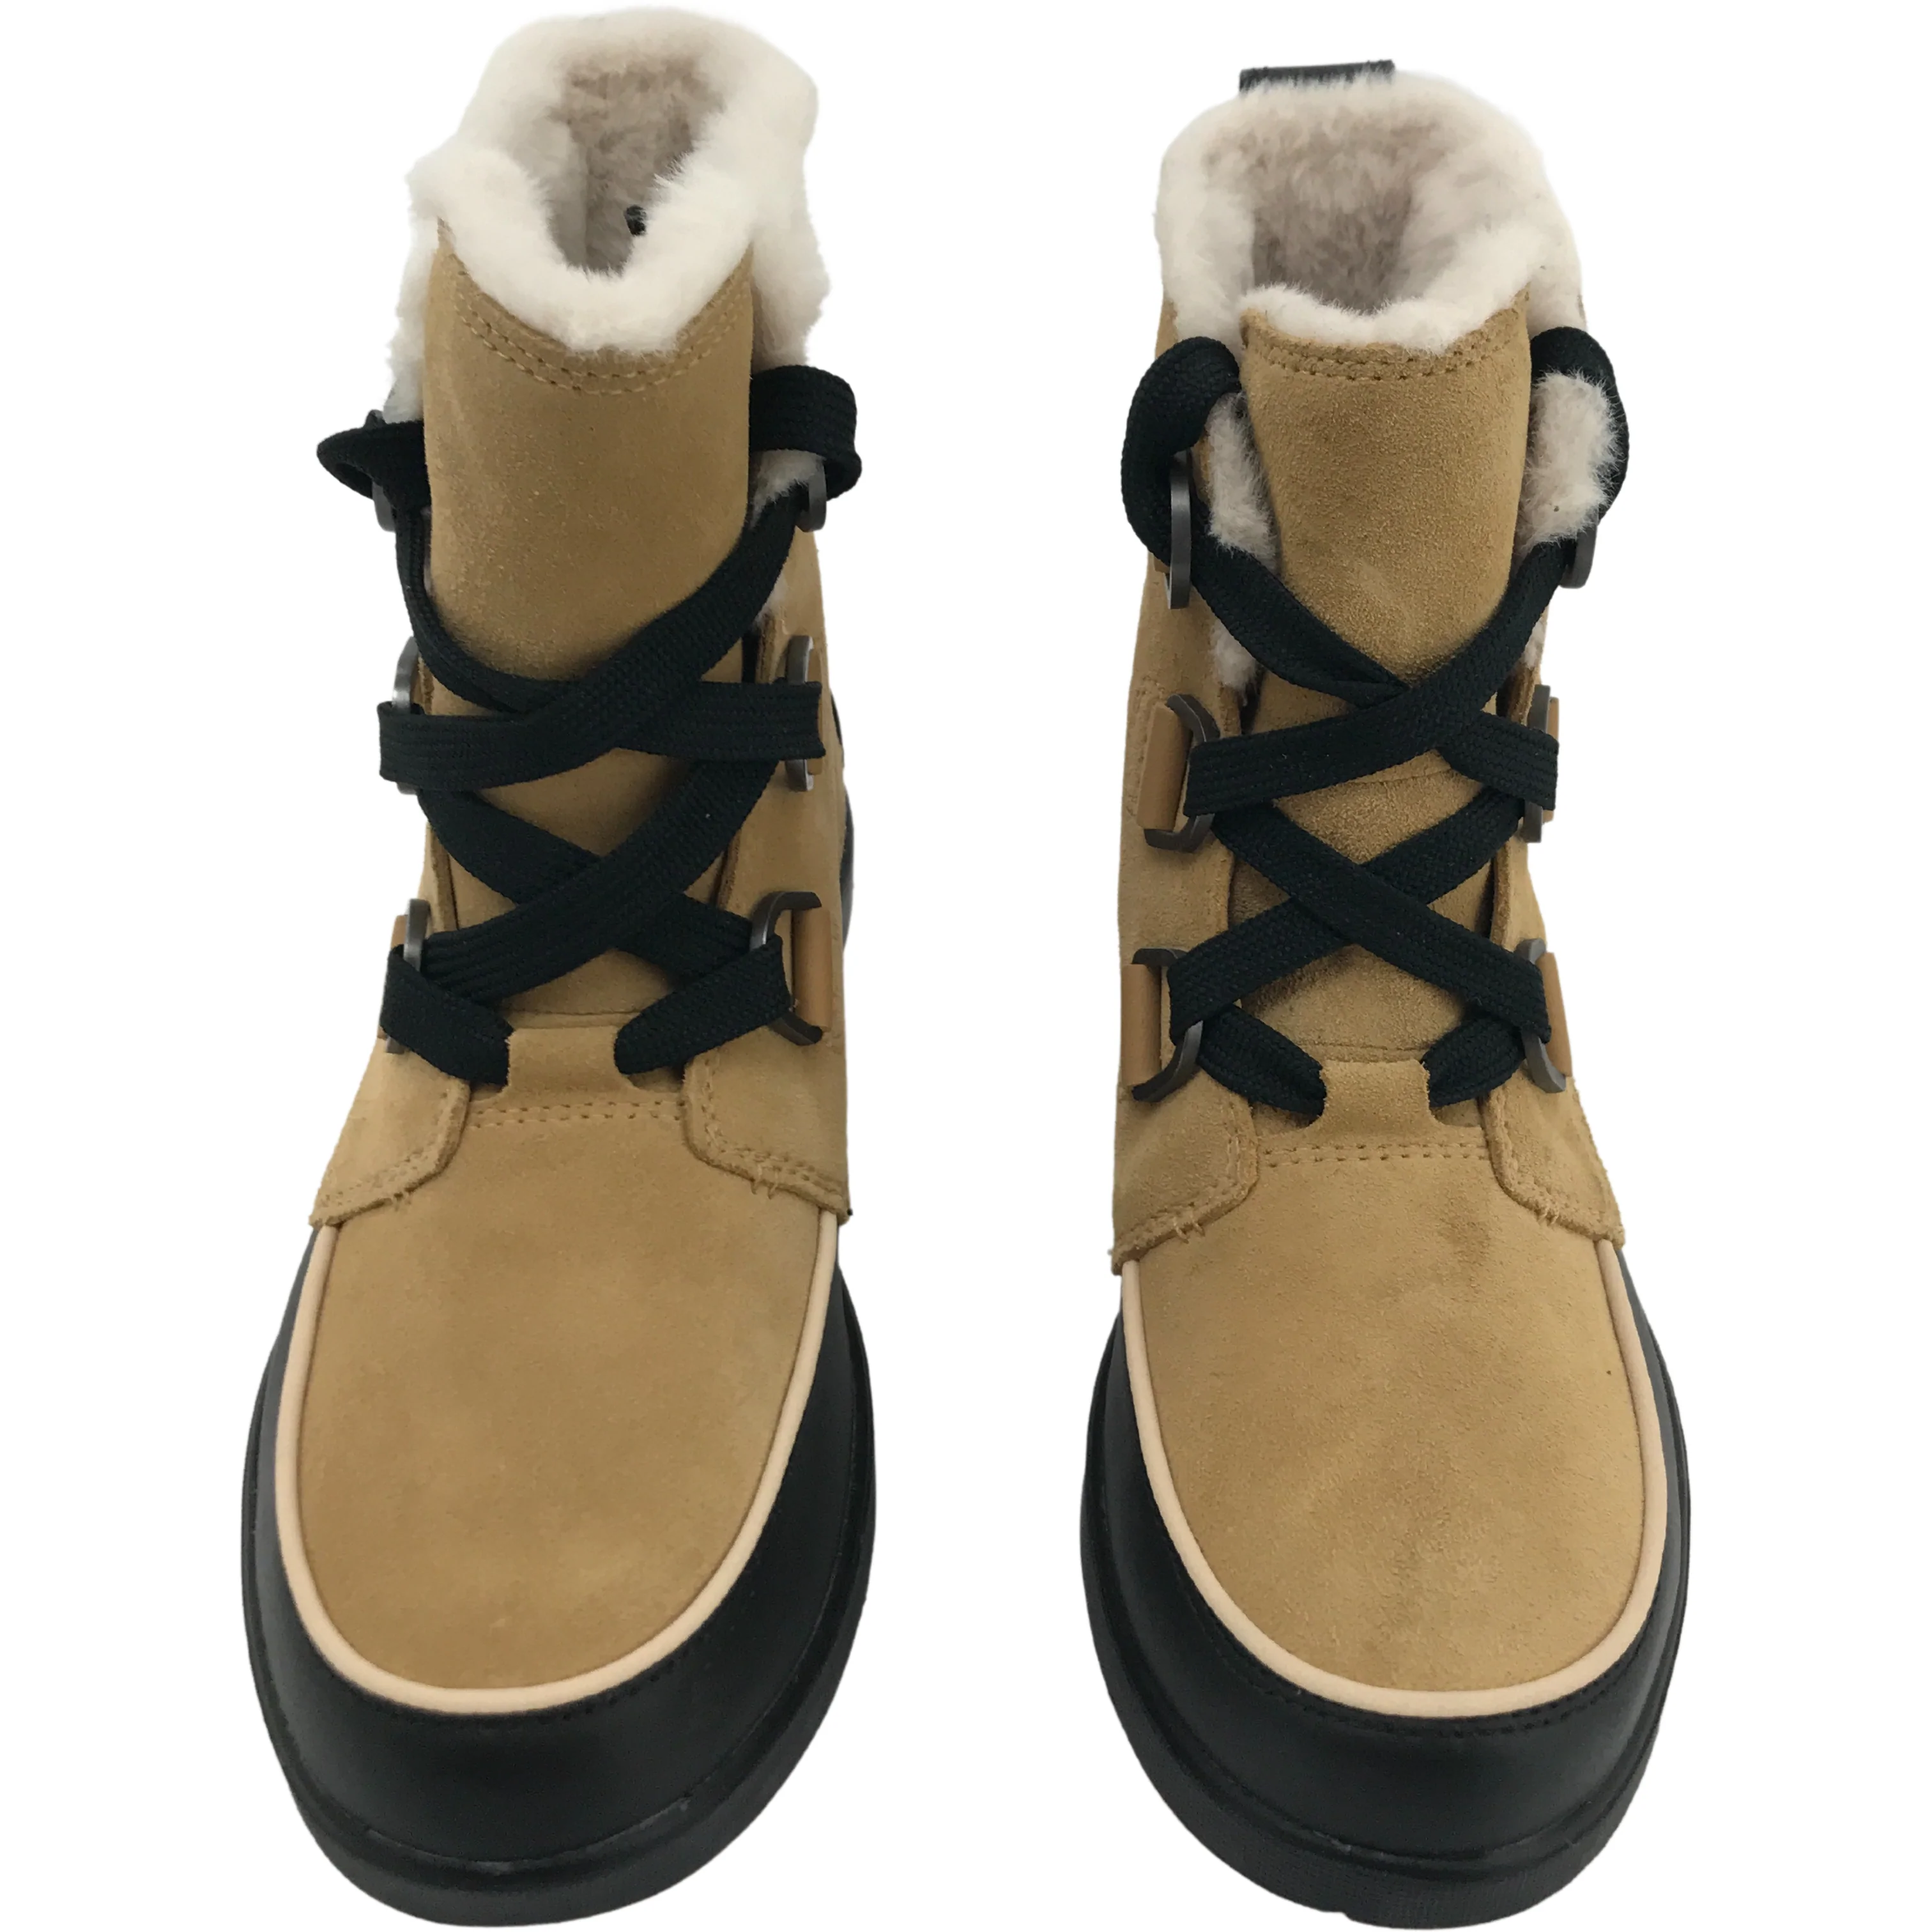 Sorrel Women's Winter Boots / Torino II / Short Boots / Tan / Size 8